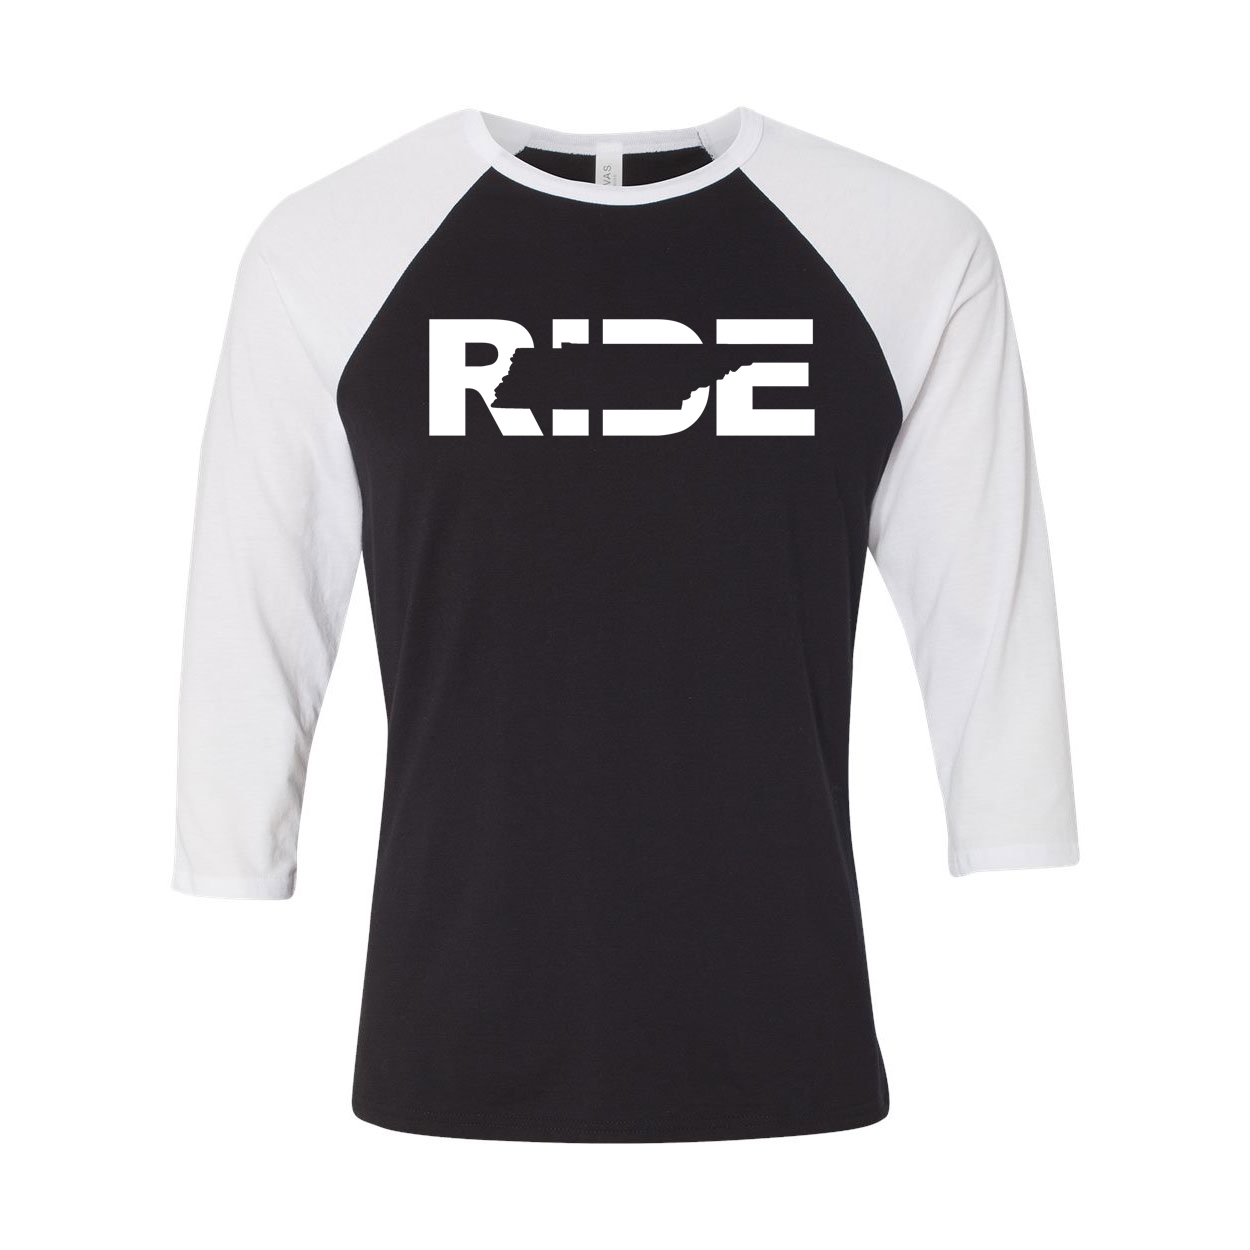 Ride Tennessee Classic Raglan Shirt Black/White (White Logo)